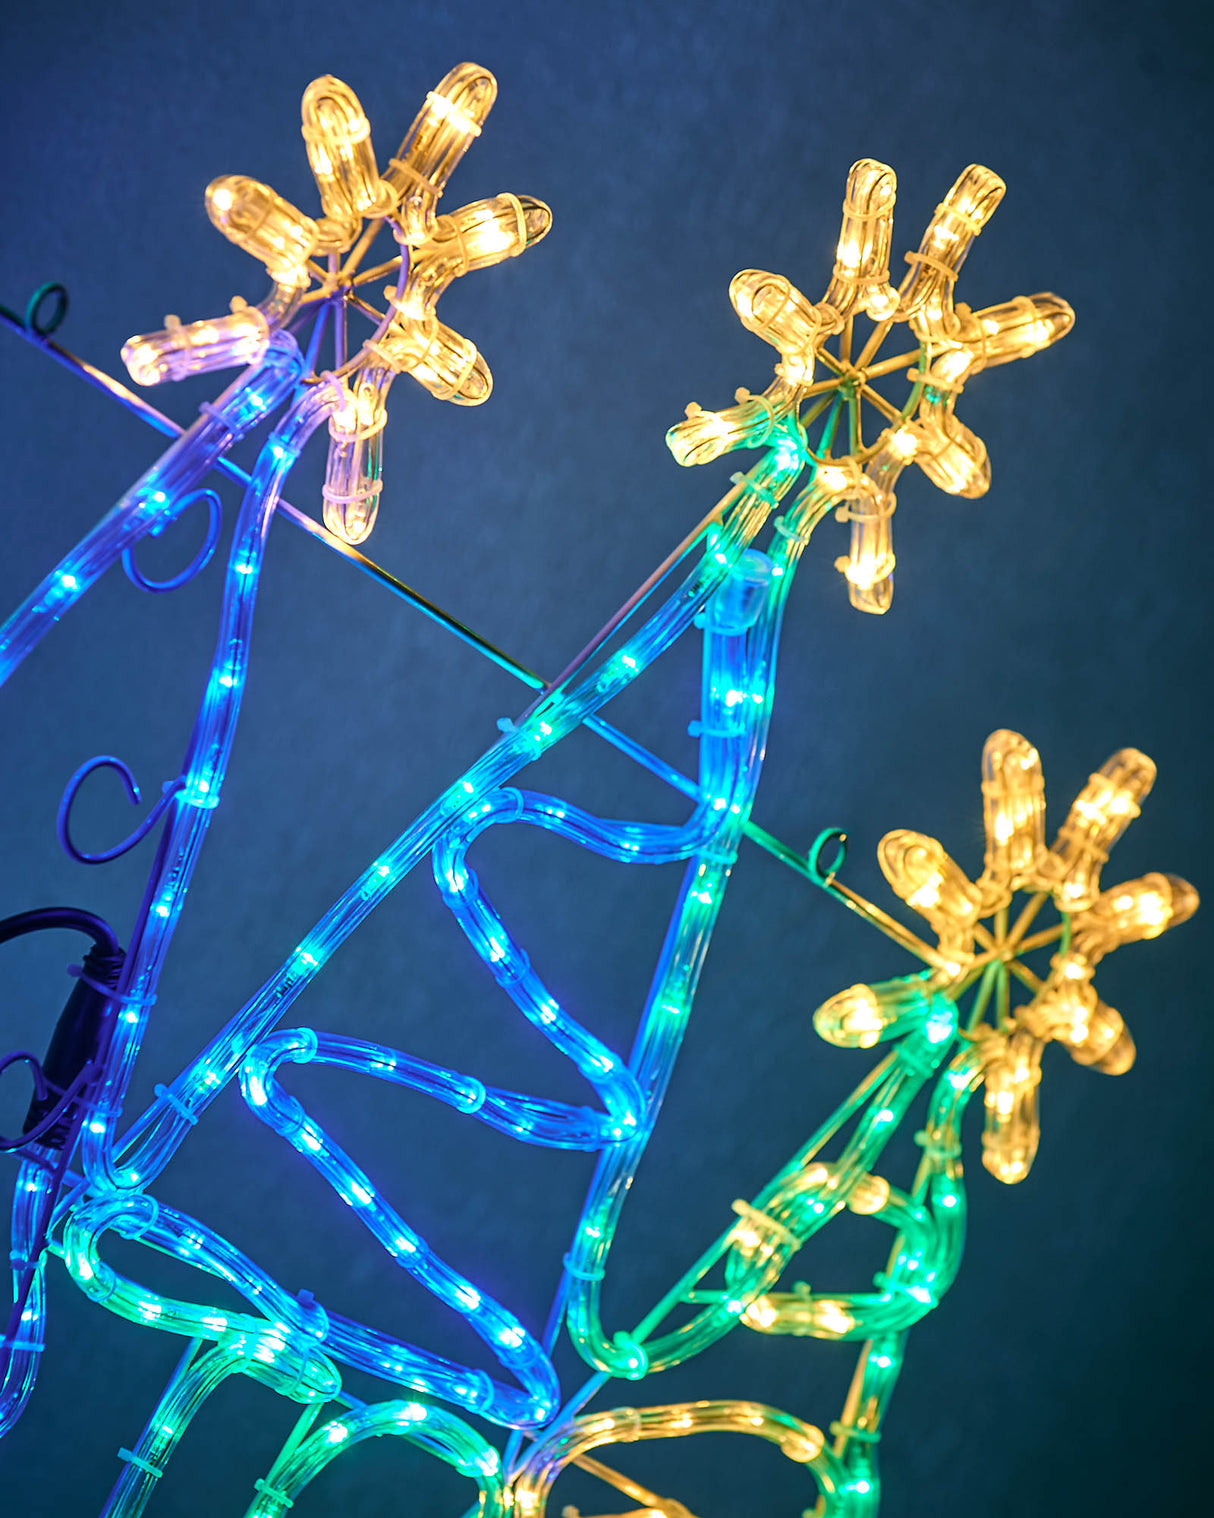 Set of 4 LED Christmas Trees Rope Light Silhouette, 104 cm